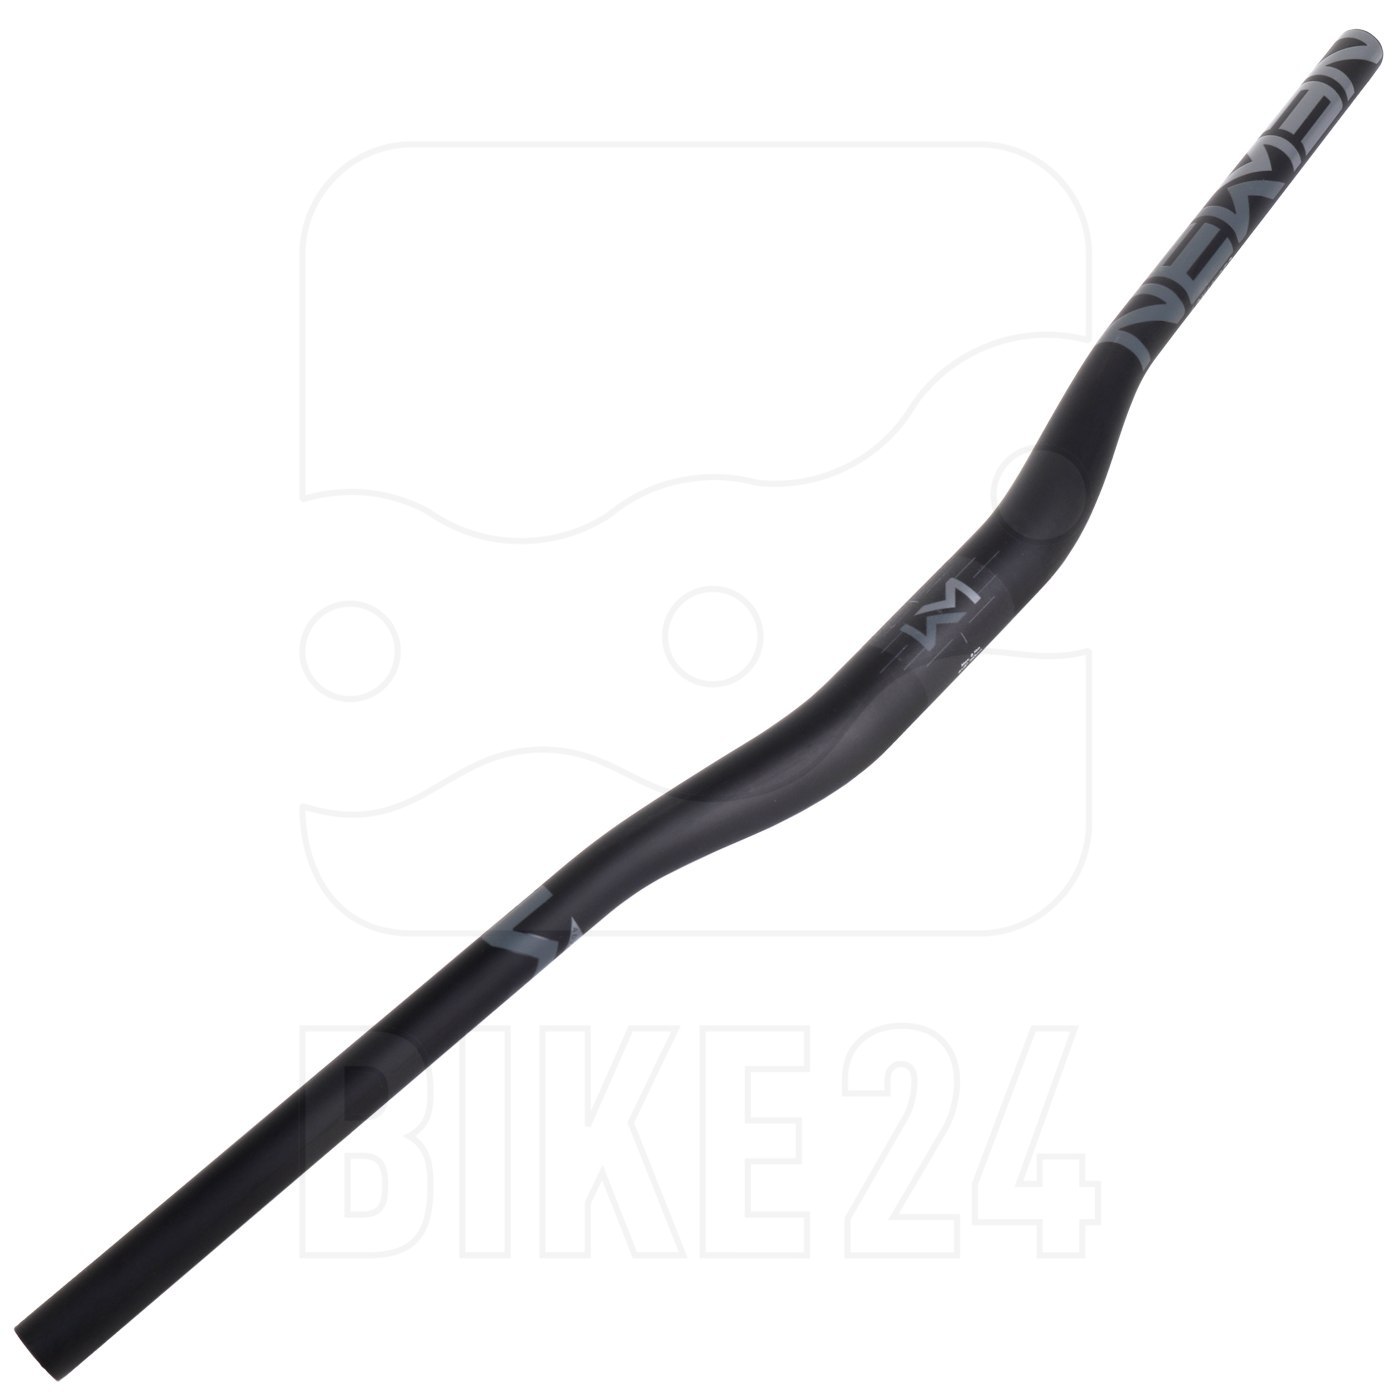 Productfoto van Newmen Advanced Carbon Handlebar - 318.25 - 760mm - Lowriser - black